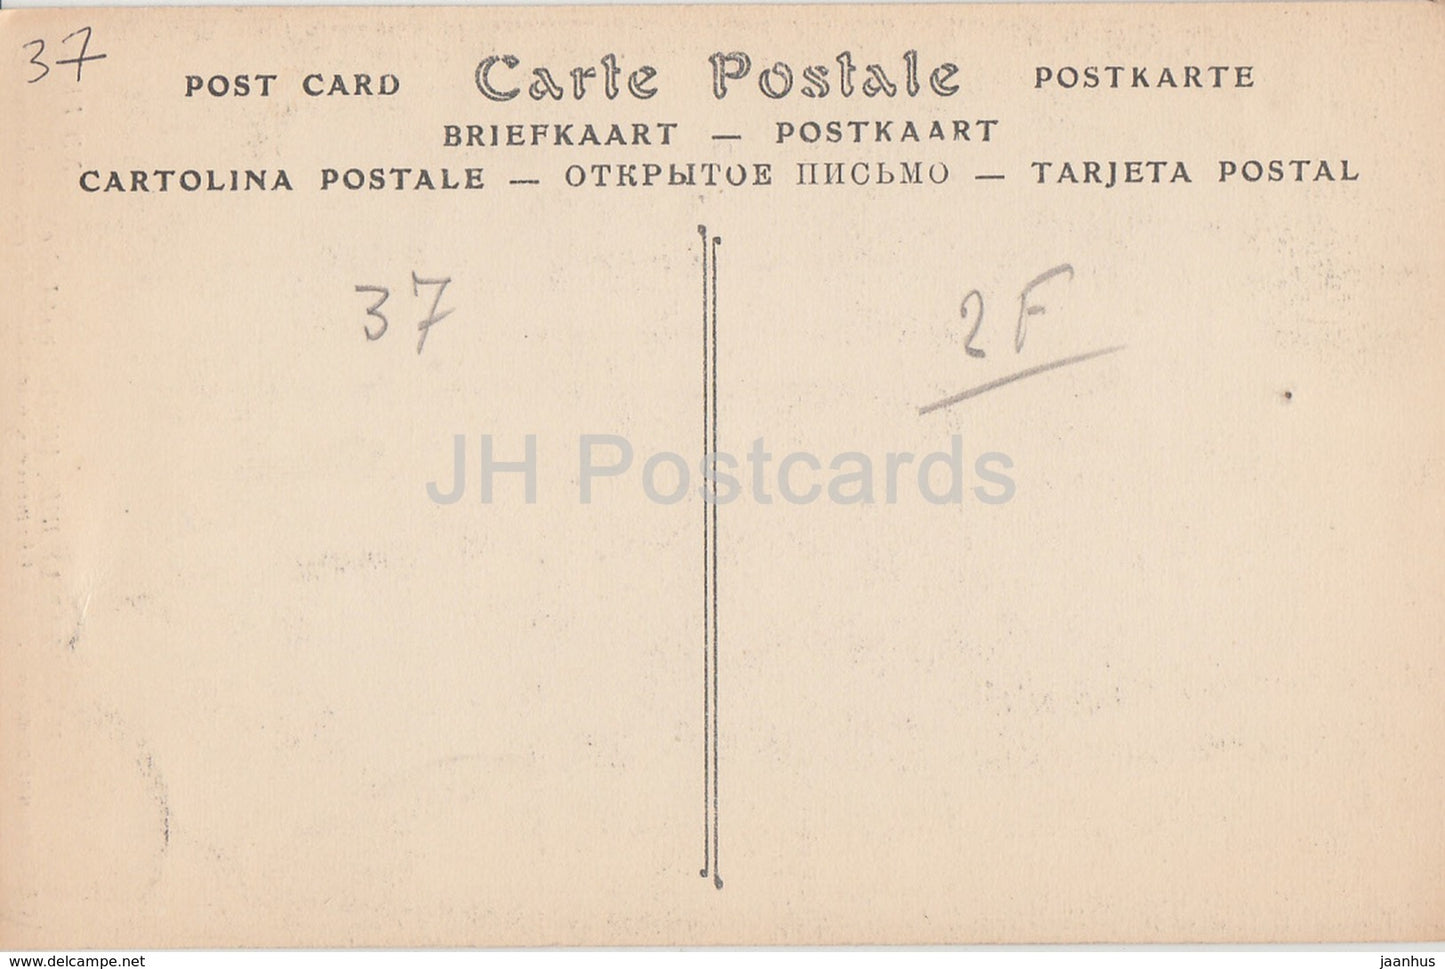 Azay Le Rideau - Chateau National - Cheminee d'une Salle - castle - 88 - old postcard - France - unused